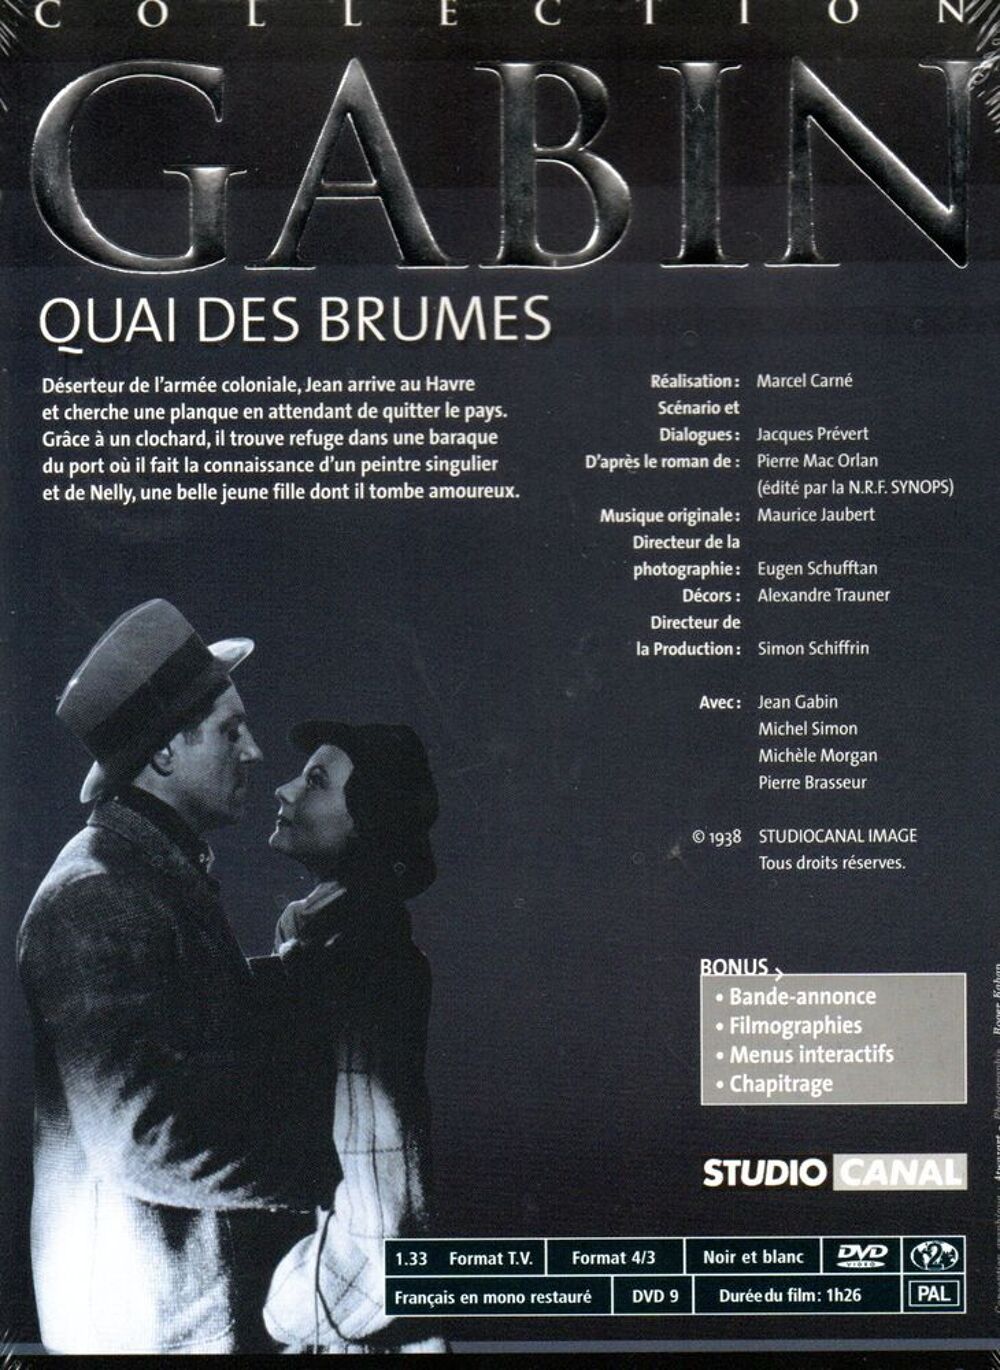 QUAI DES BRUMES format DVD synopsis en photo DVD et blu-ray